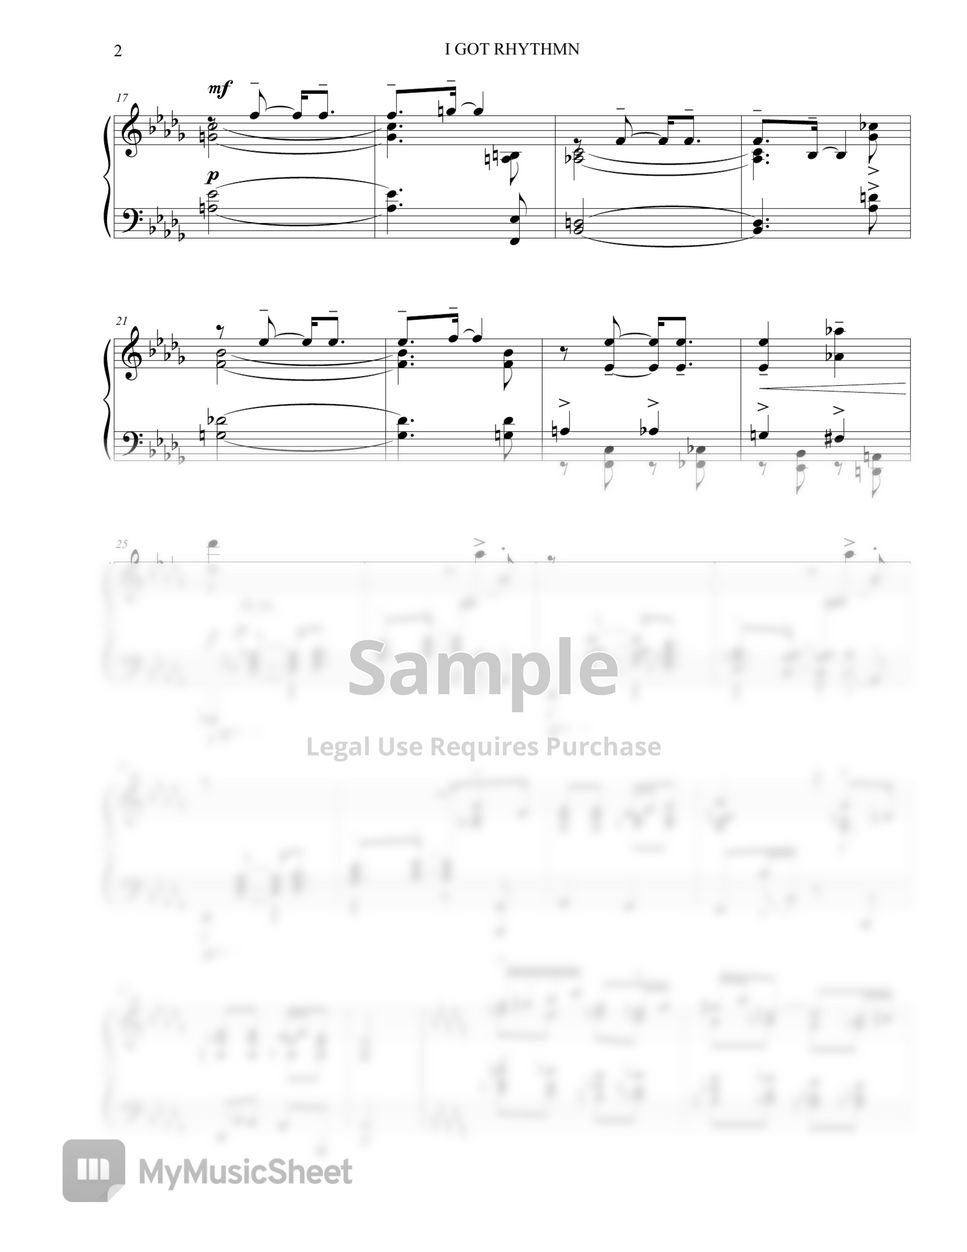 George Gershwin - I Got Rhythmn by EUNTAEK JUNG